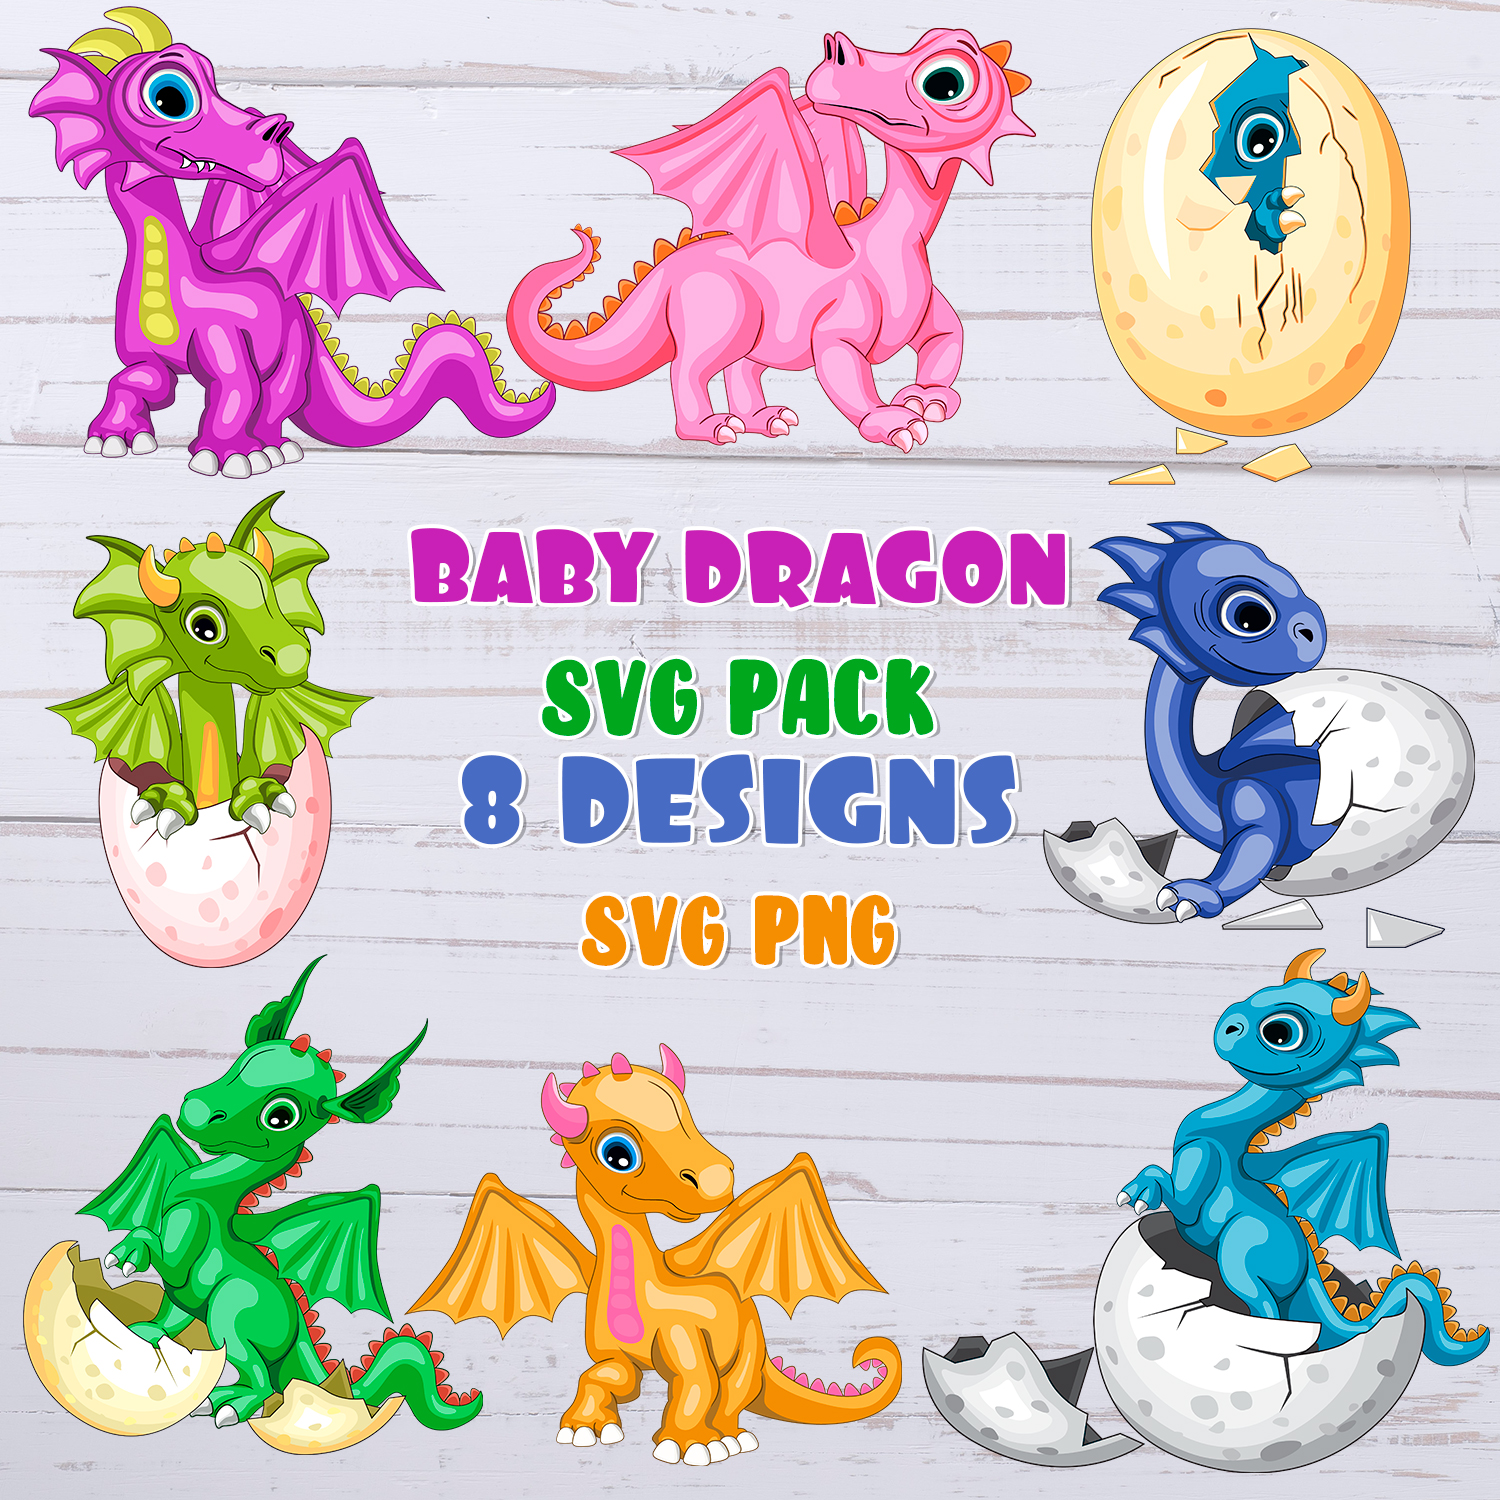 Baby Dragon SVG.